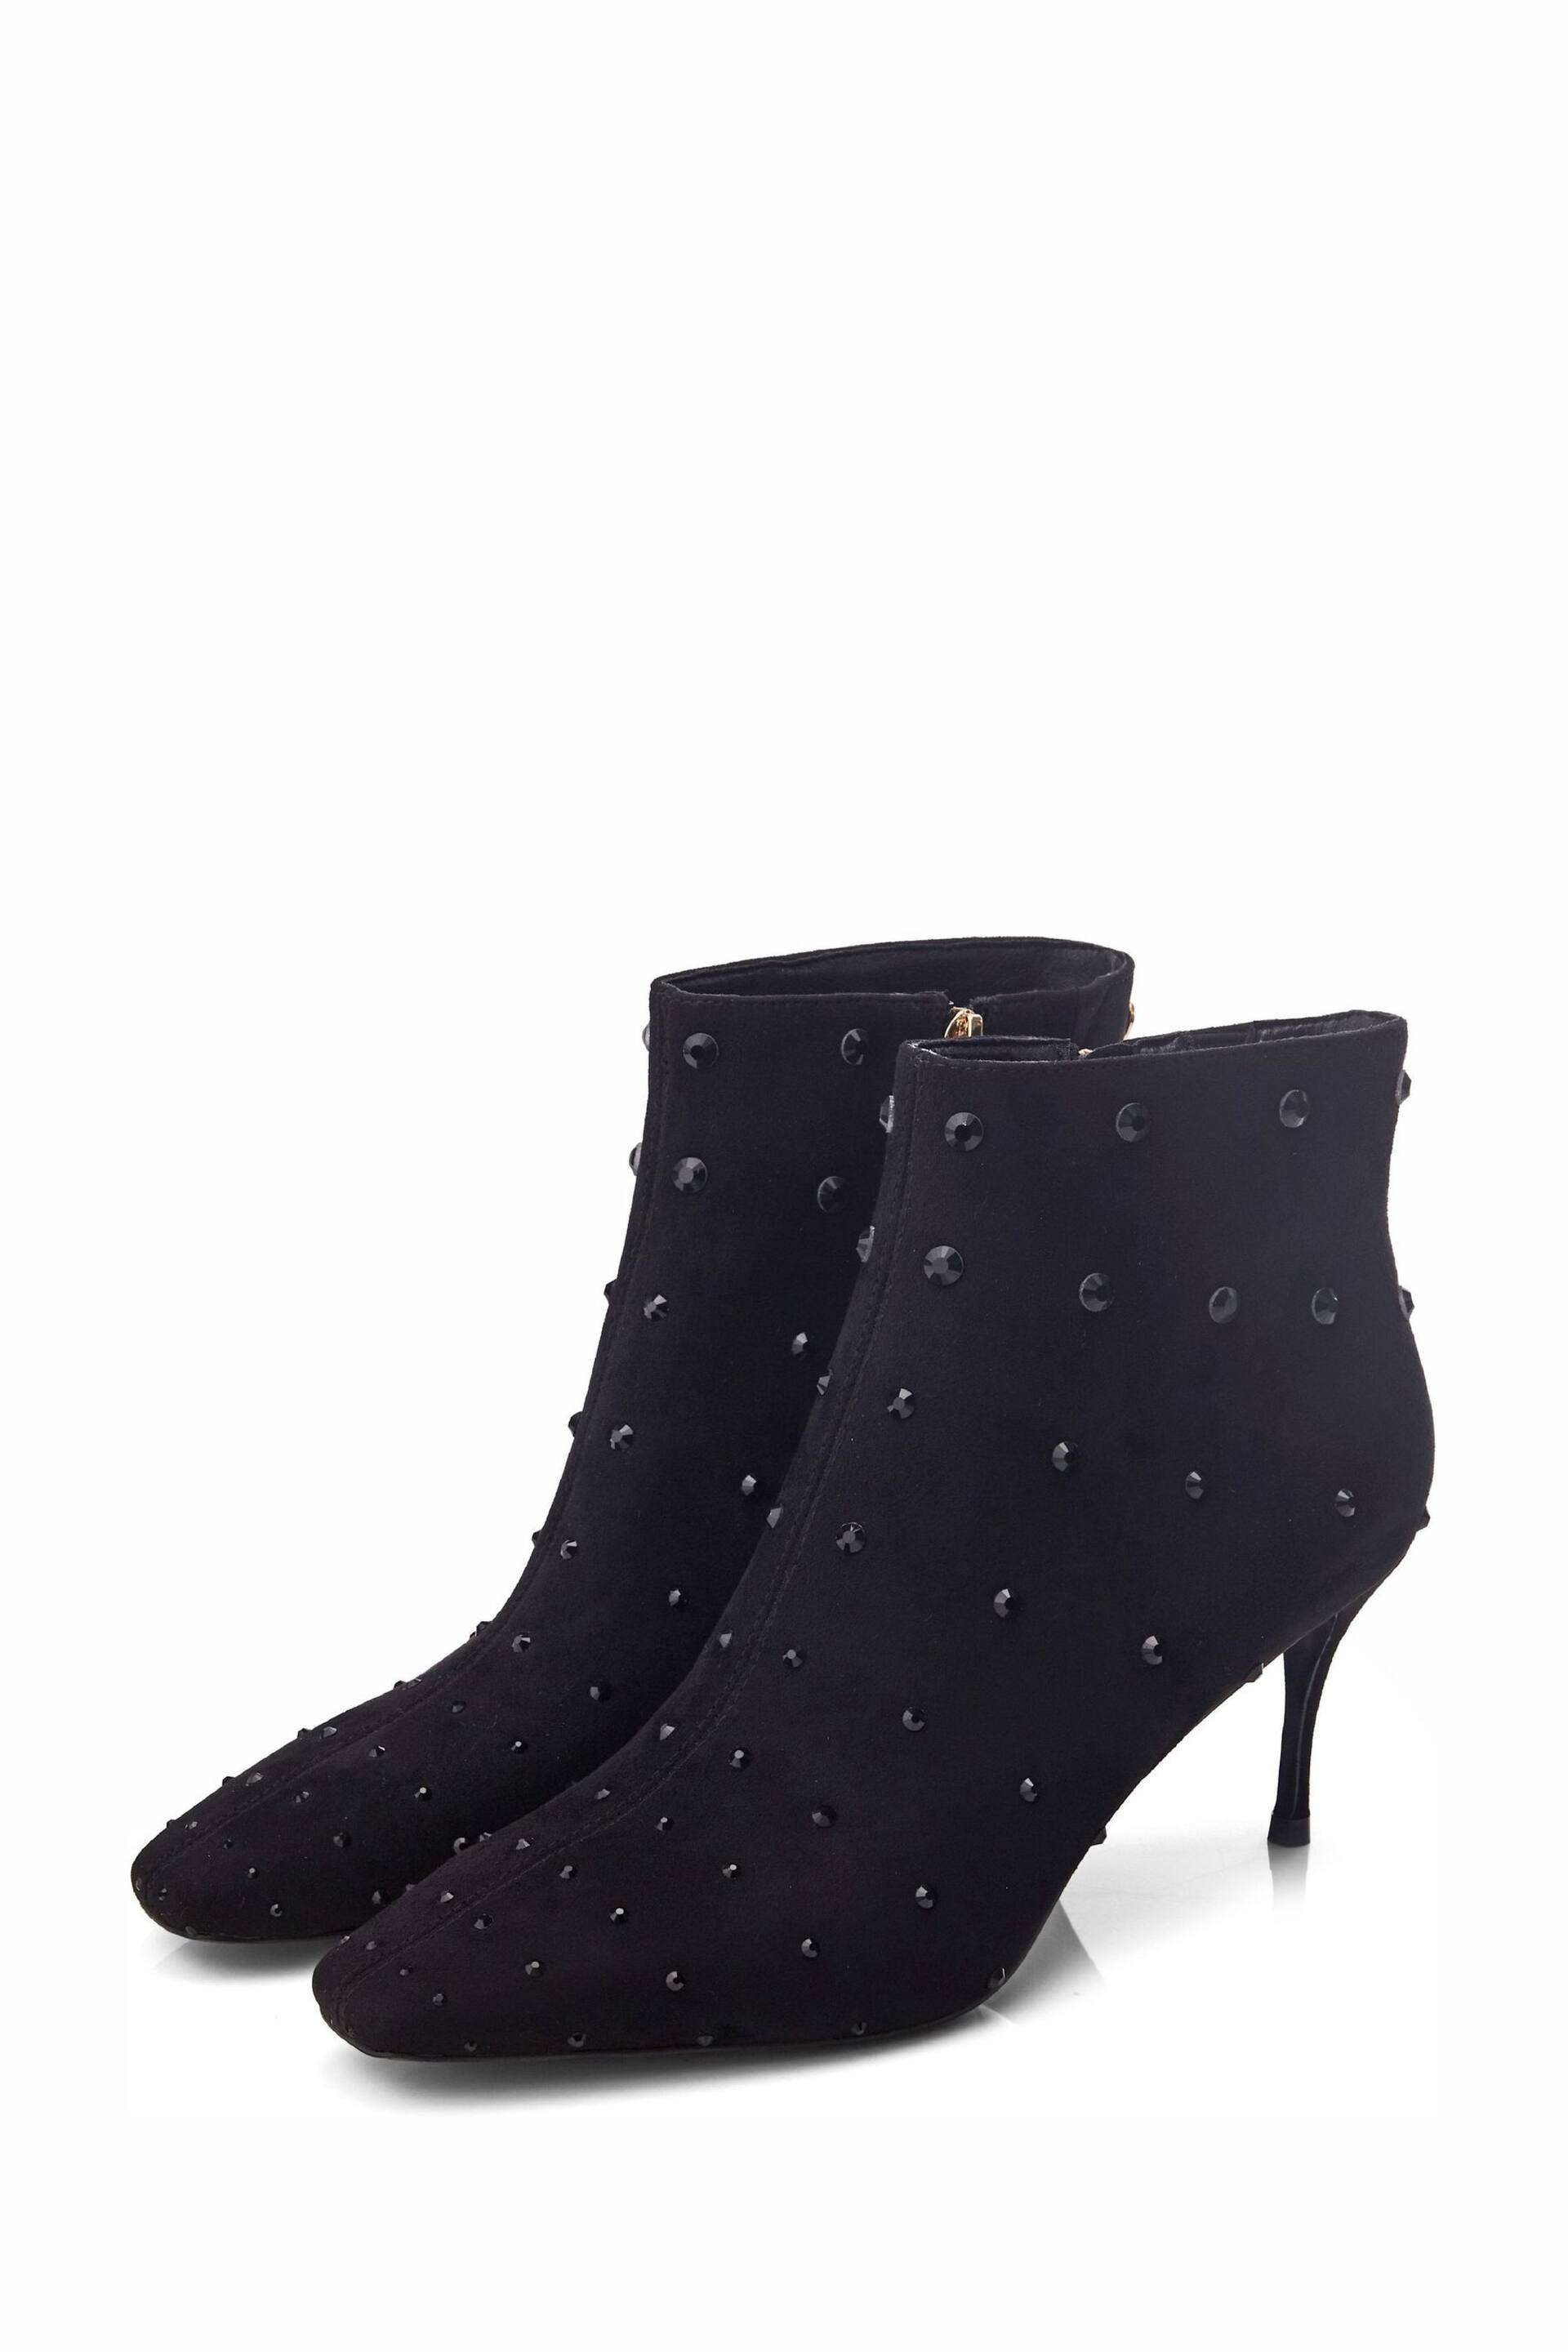 Moda in Pelle Wenoa Sq Toe Kitten Heel Crystal Stone Ankle Black Boots - Image 4 of 5